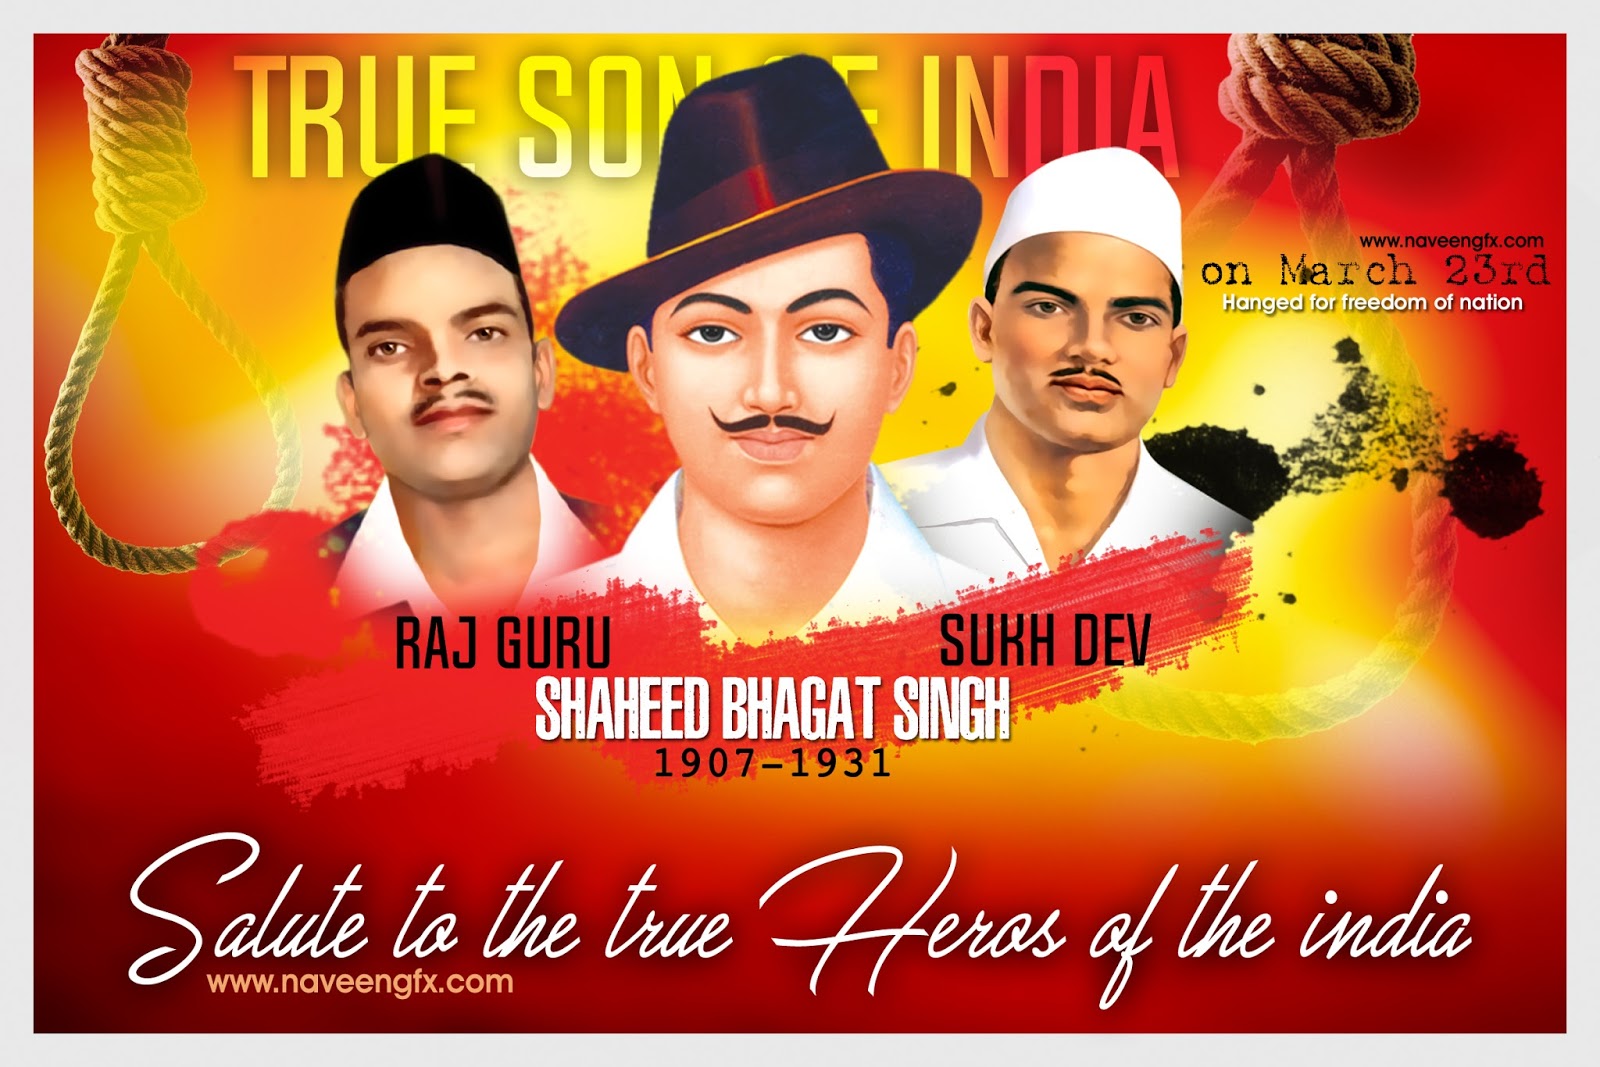 shaheed bhagat singh vardanthi poster with rajuguru sukh dev images |  naveengfx